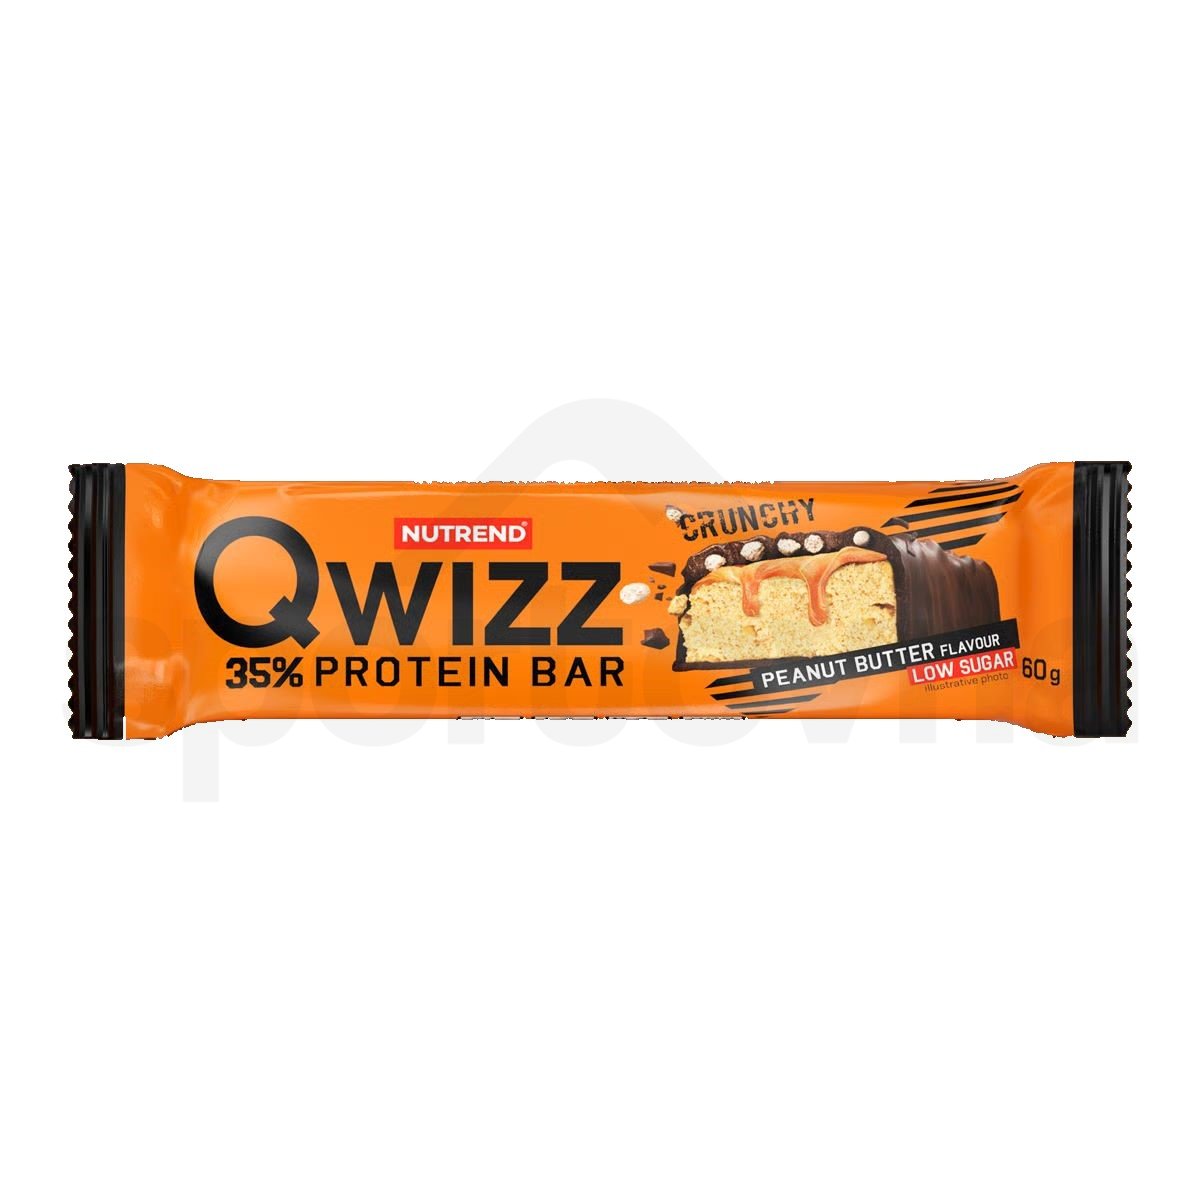 Nutrend Qwizz Protein Bar 60g - arašídové máslo